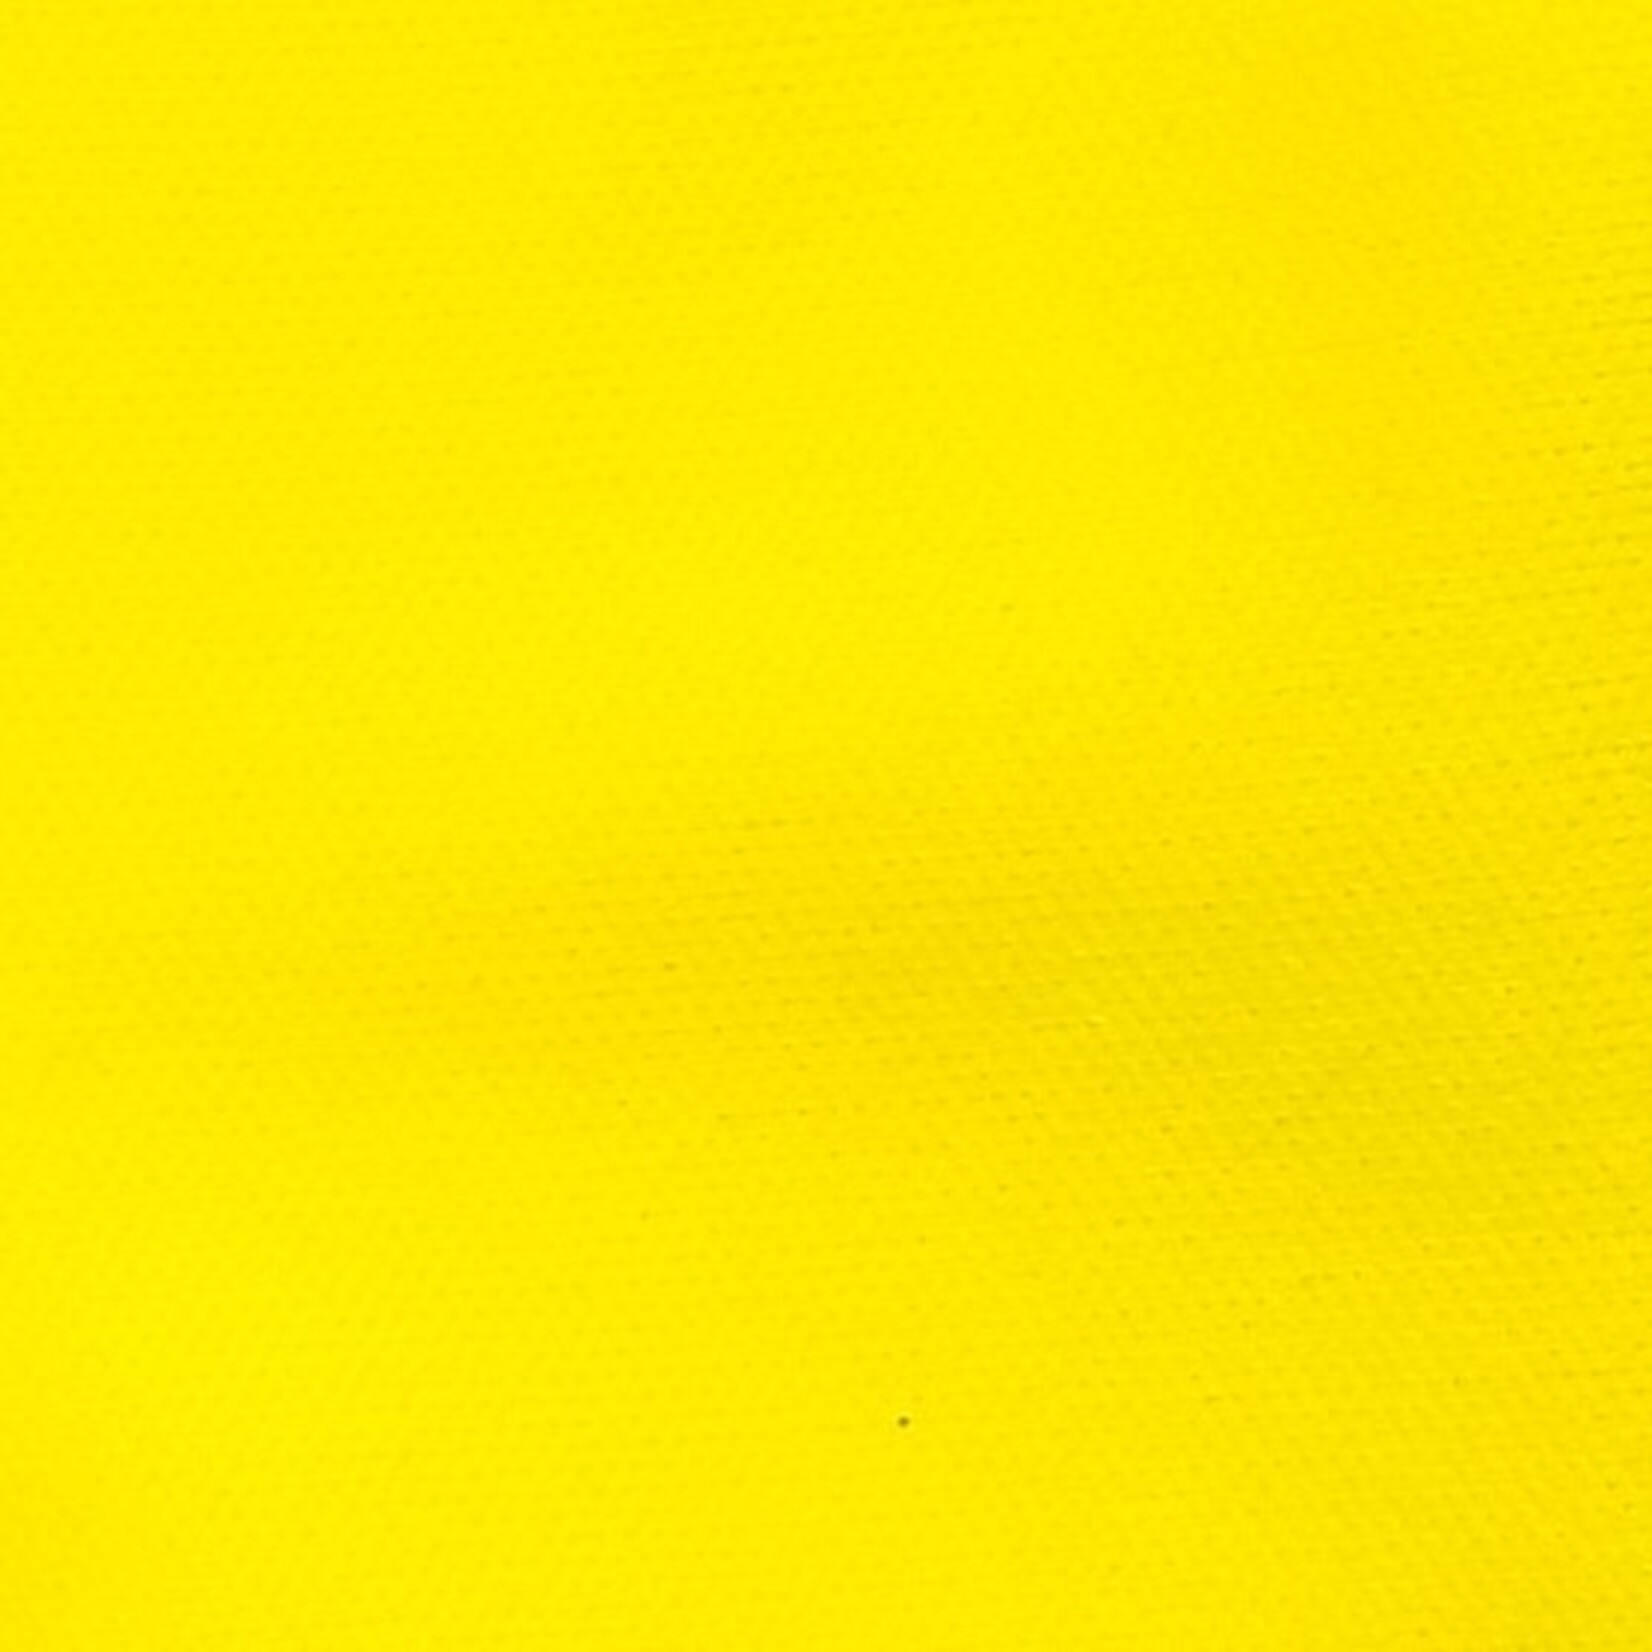 Plain Quiana 60 Inches Yellow